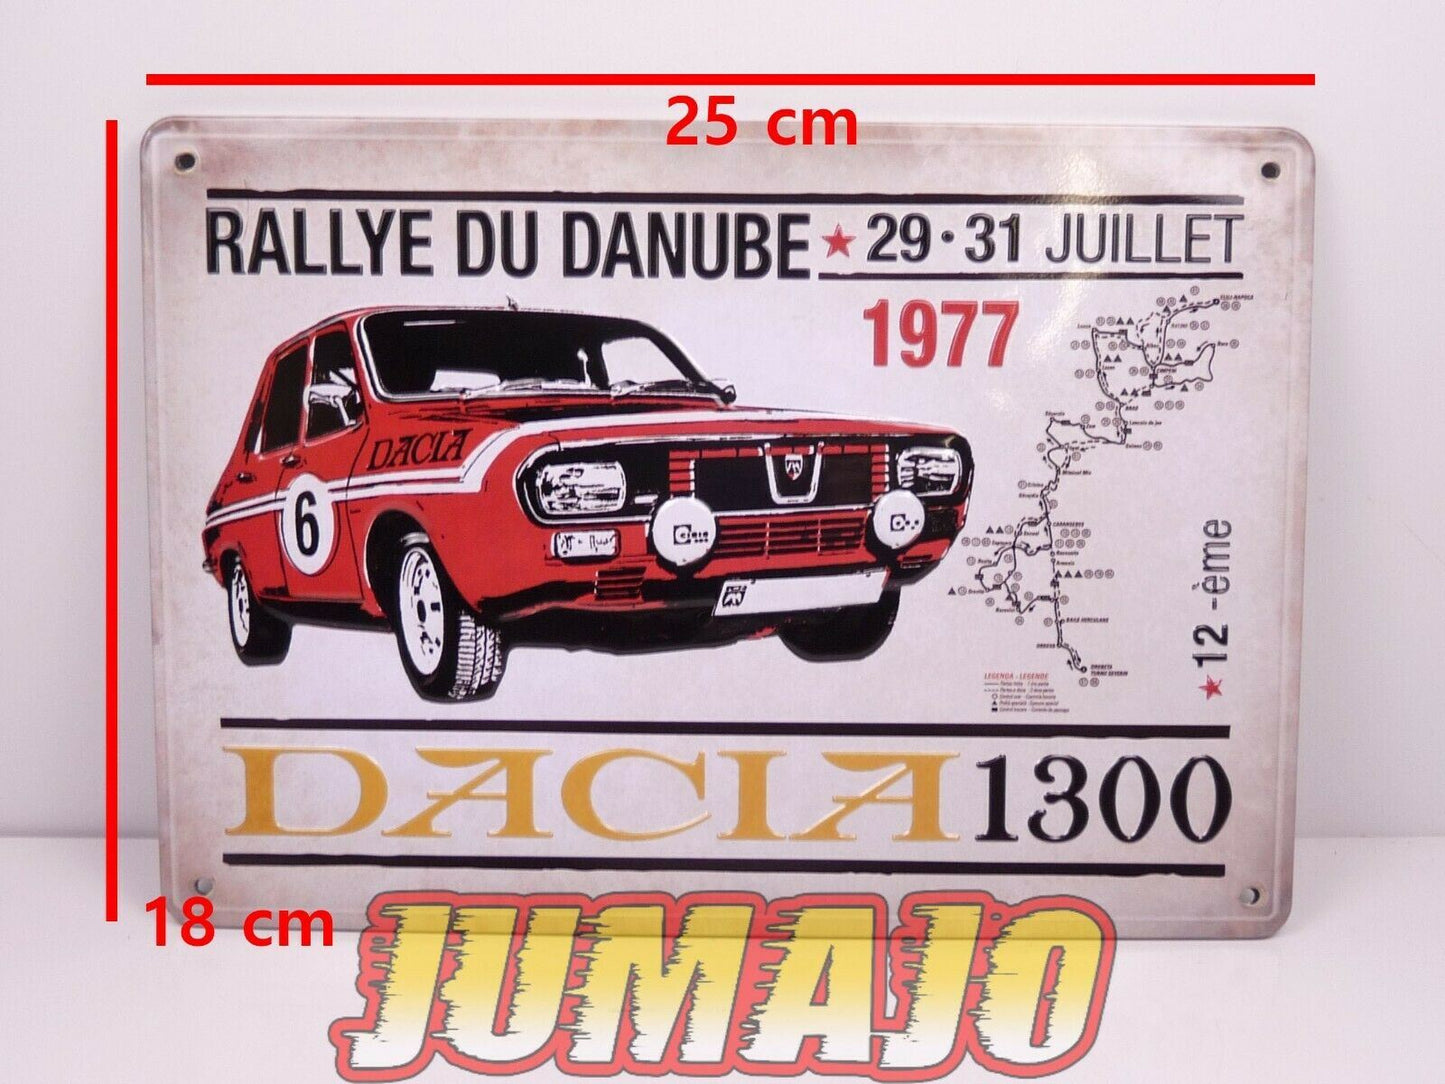 PB110 plaques Tôlée embossée DACIA 1300 (Renault 12) Rallye du danube 1977